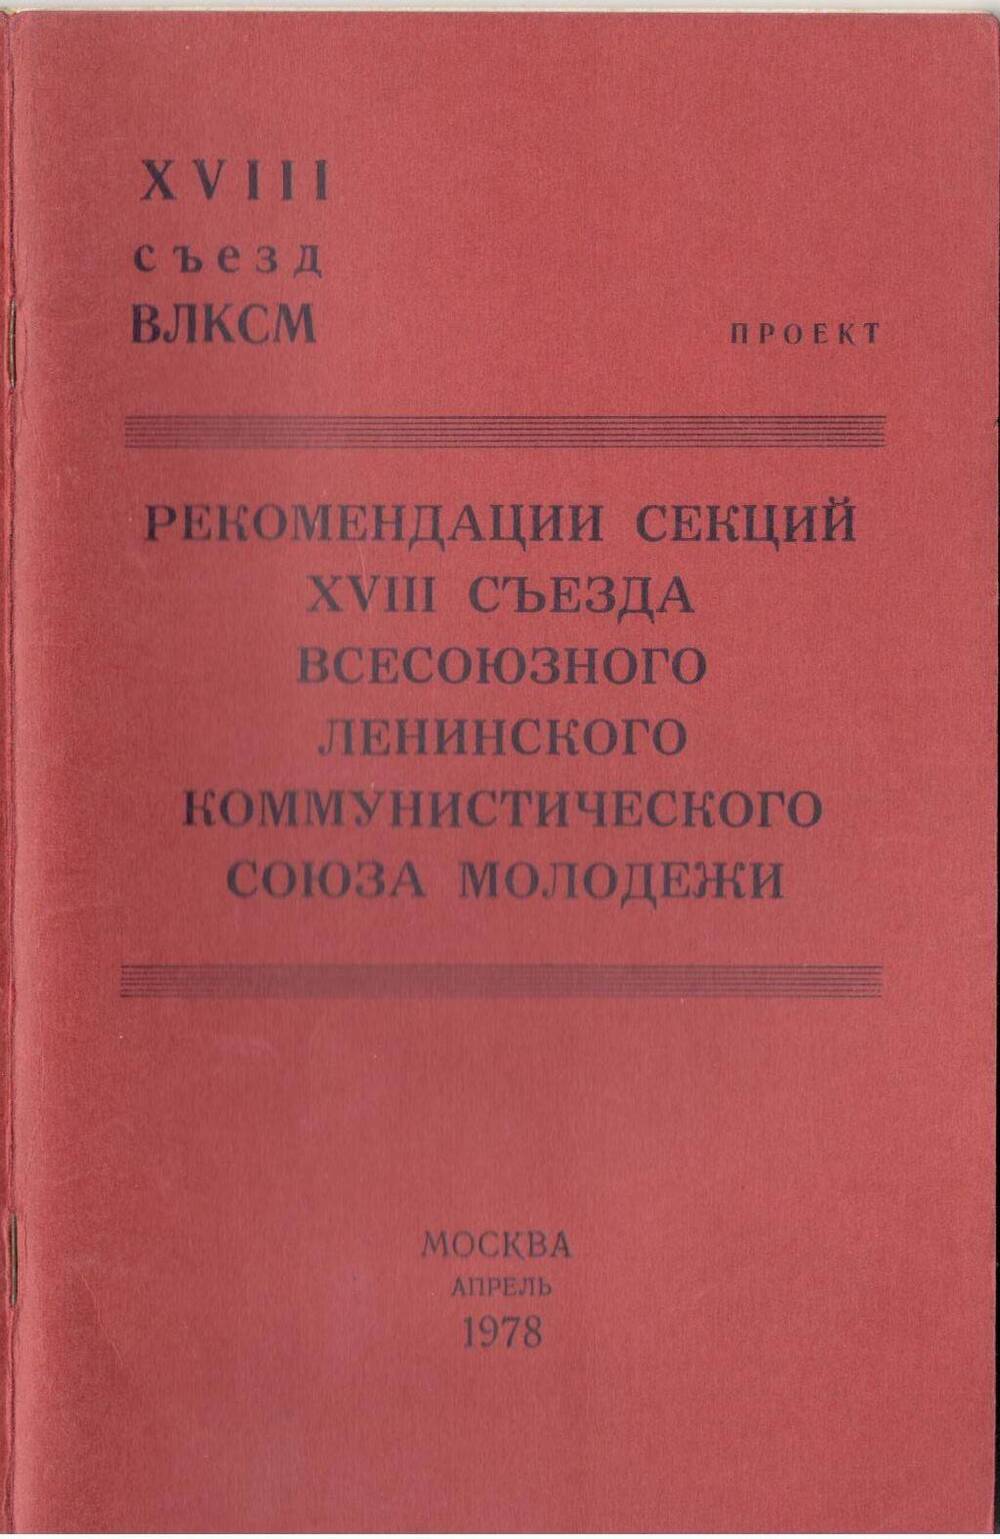 Брошюра. Проект рекомендаций секций 18 съезда ВЛКСМ, 1978 г.